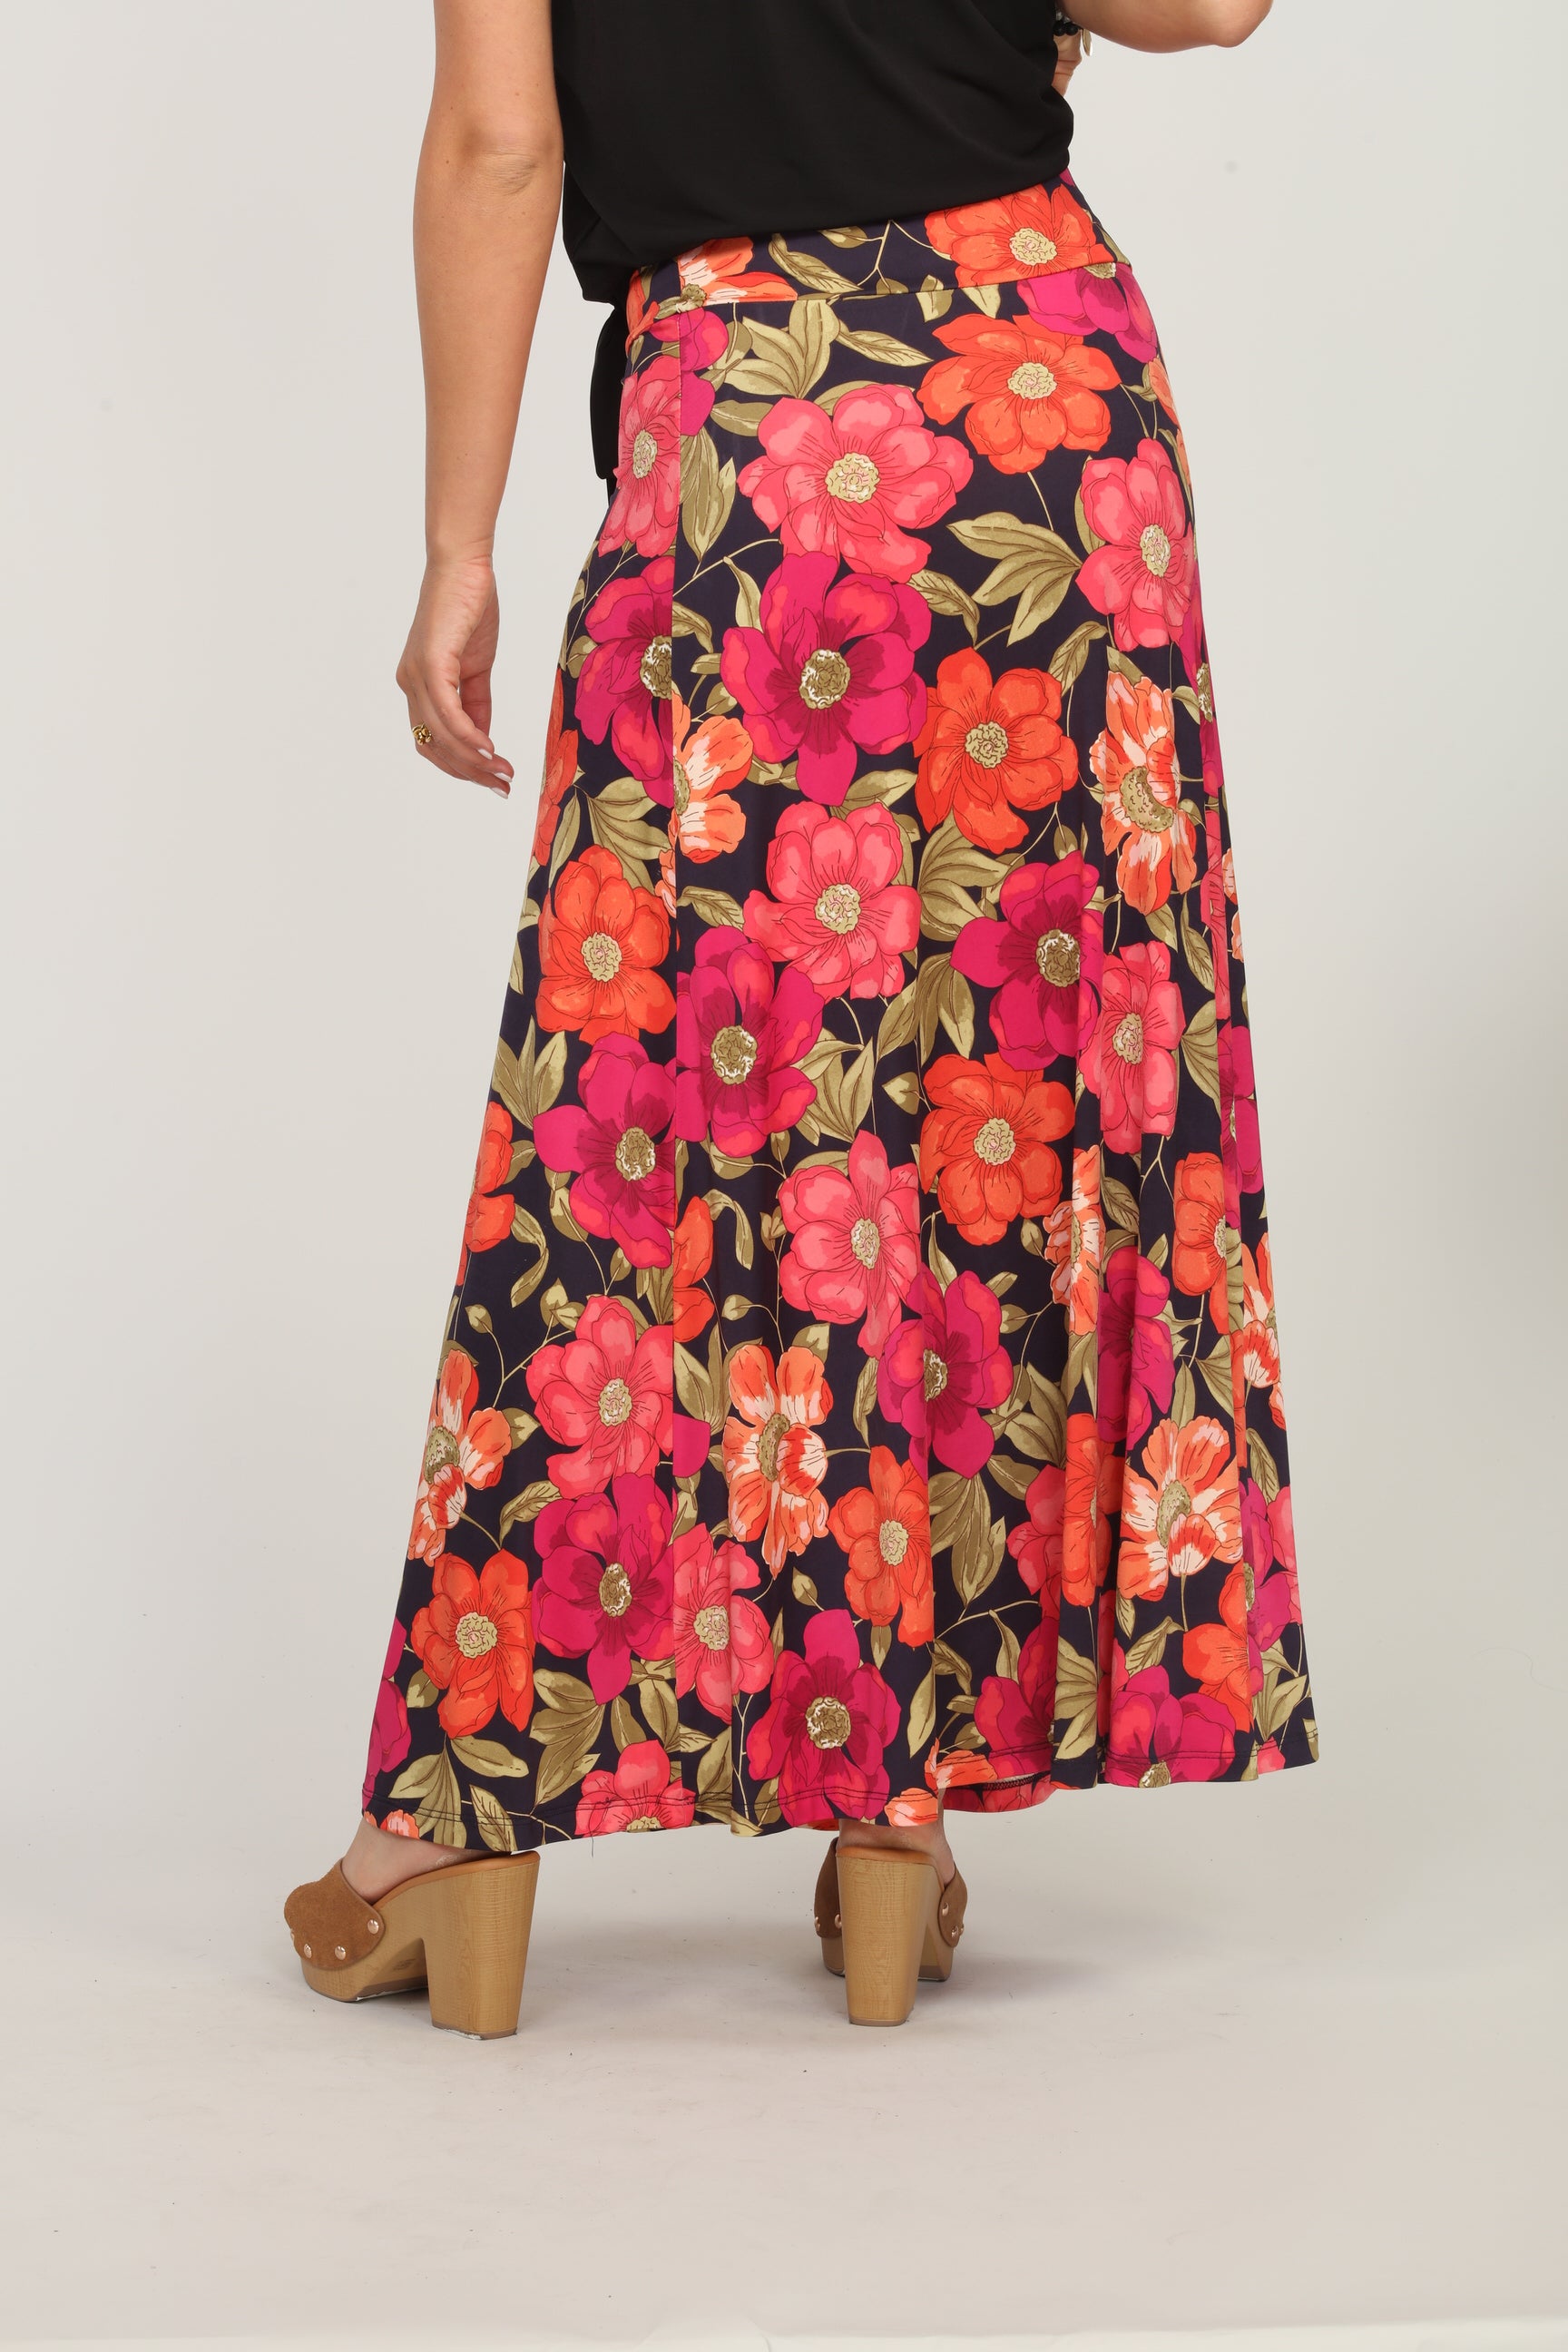 Zamba Floral Stretch Maxi Skirt